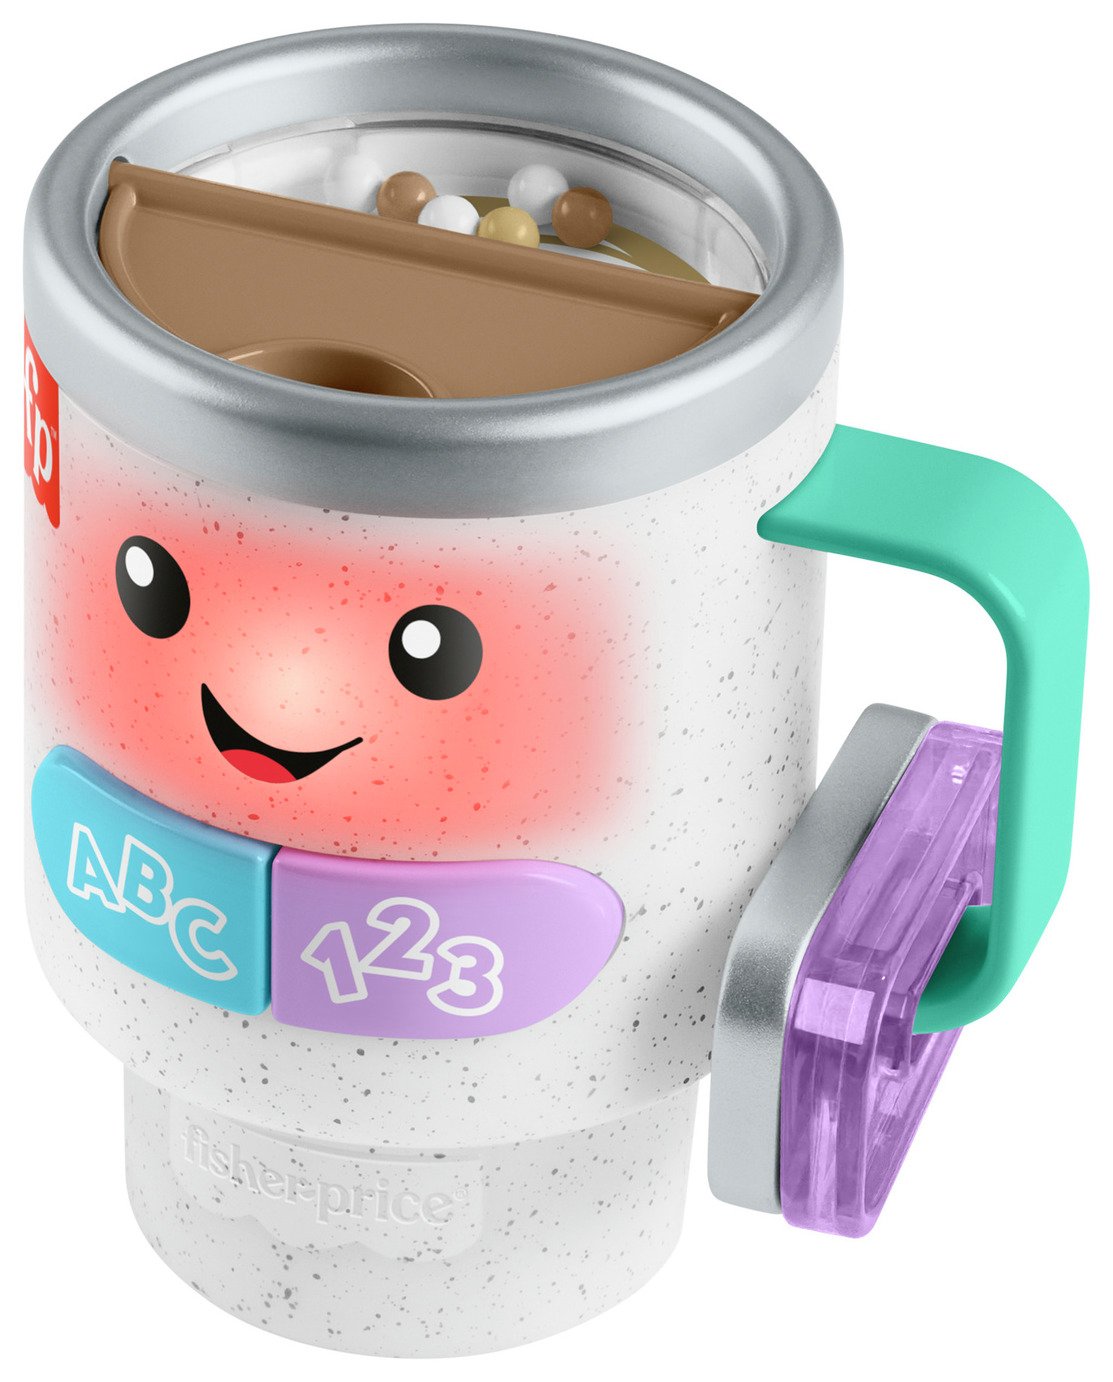 Fisher-Price Wake Up & Learn Coffee Mug Interactive Toy